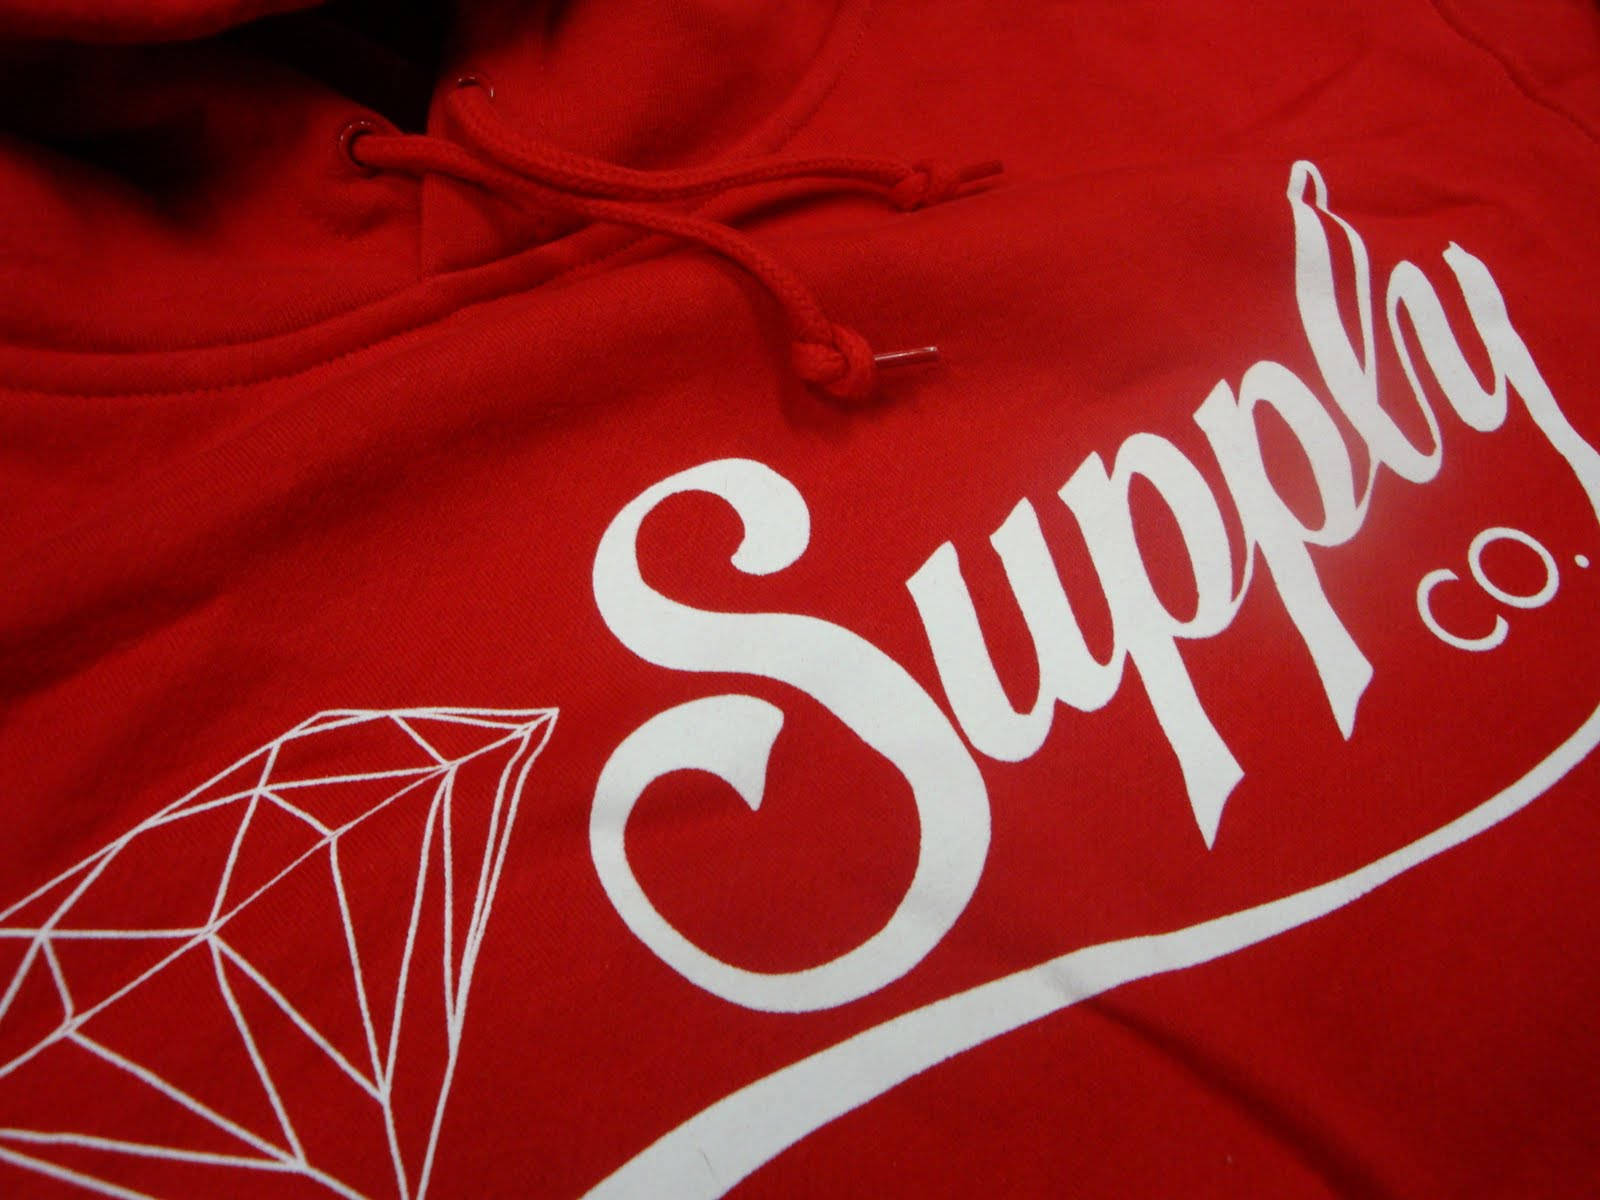 Diamond Supply Co Red Shirt Background